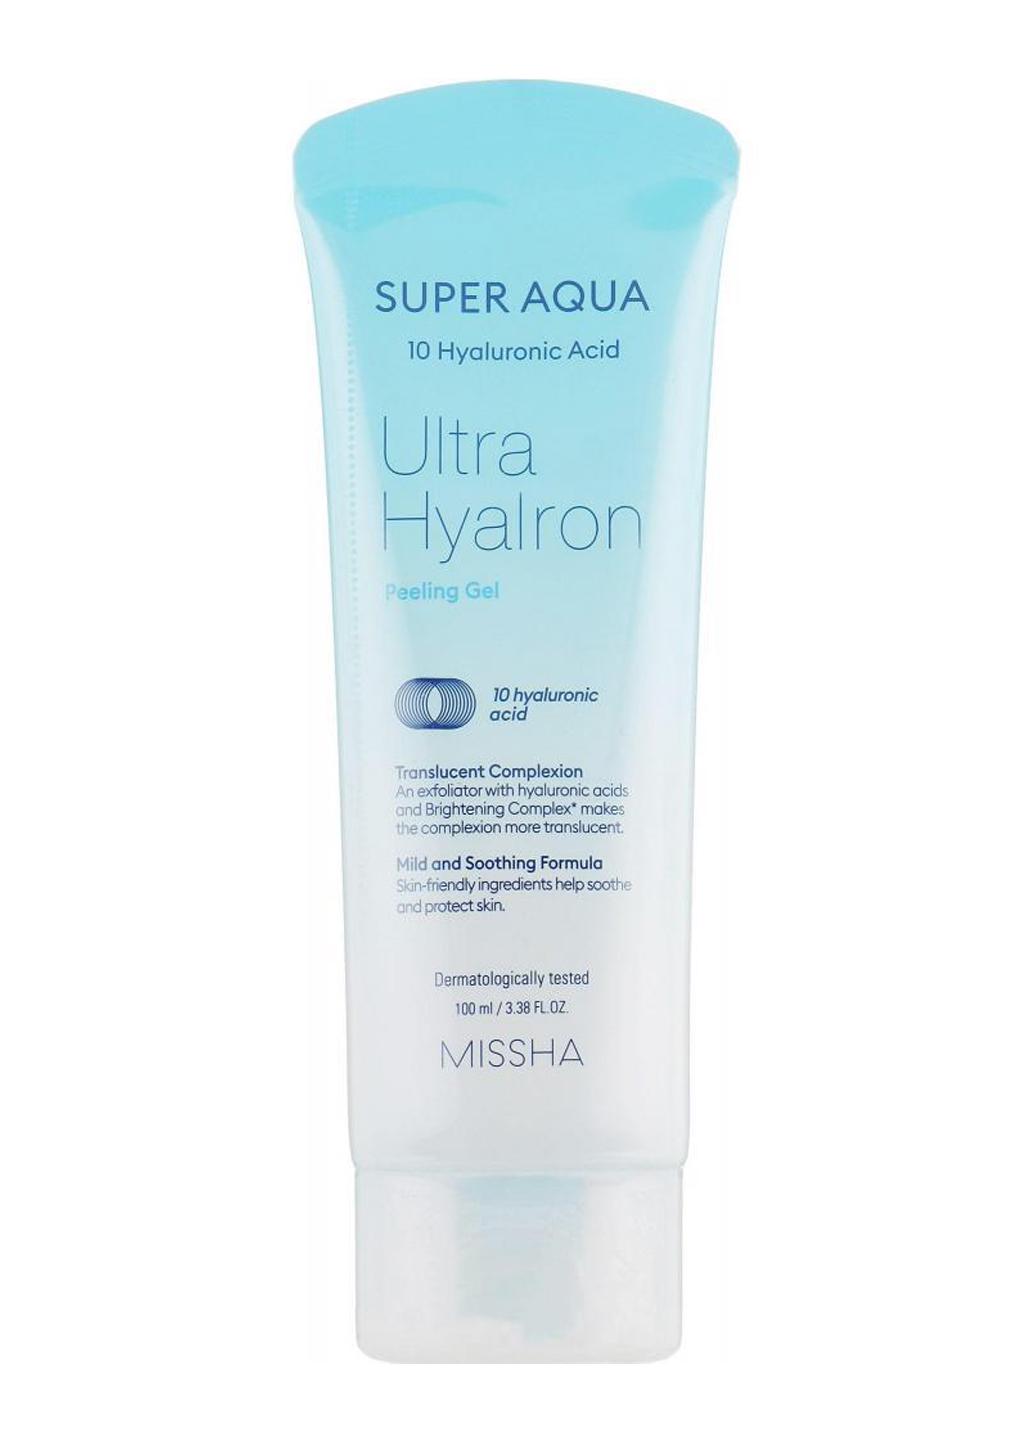 Гель-пілінг MISSHA Super Aqua Ultra Hyalron Peeling Gel для обличчя 100 мл (528360)